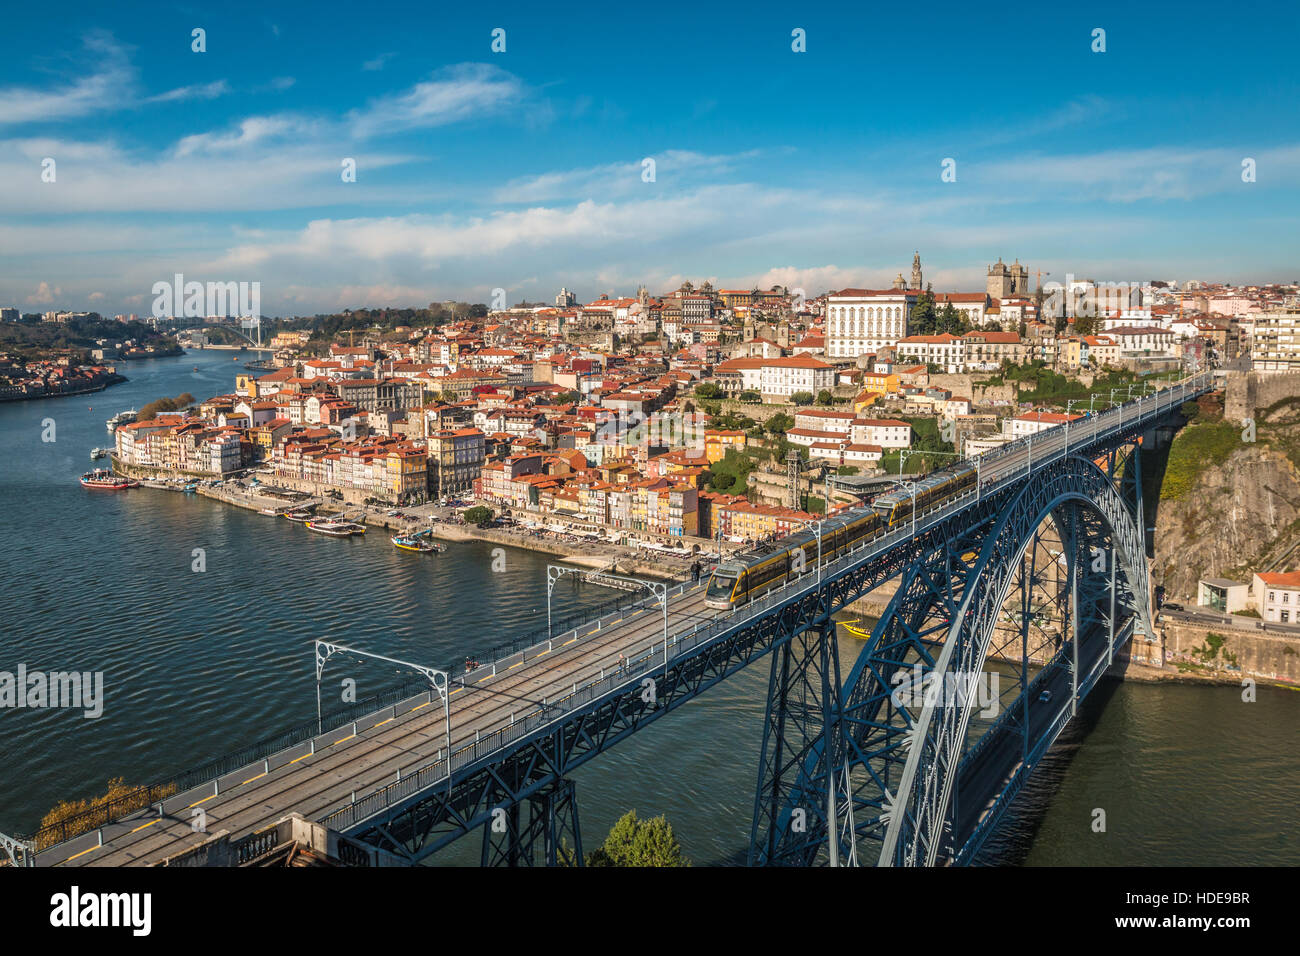 Nice view of Porto in Portugal Stock Photo